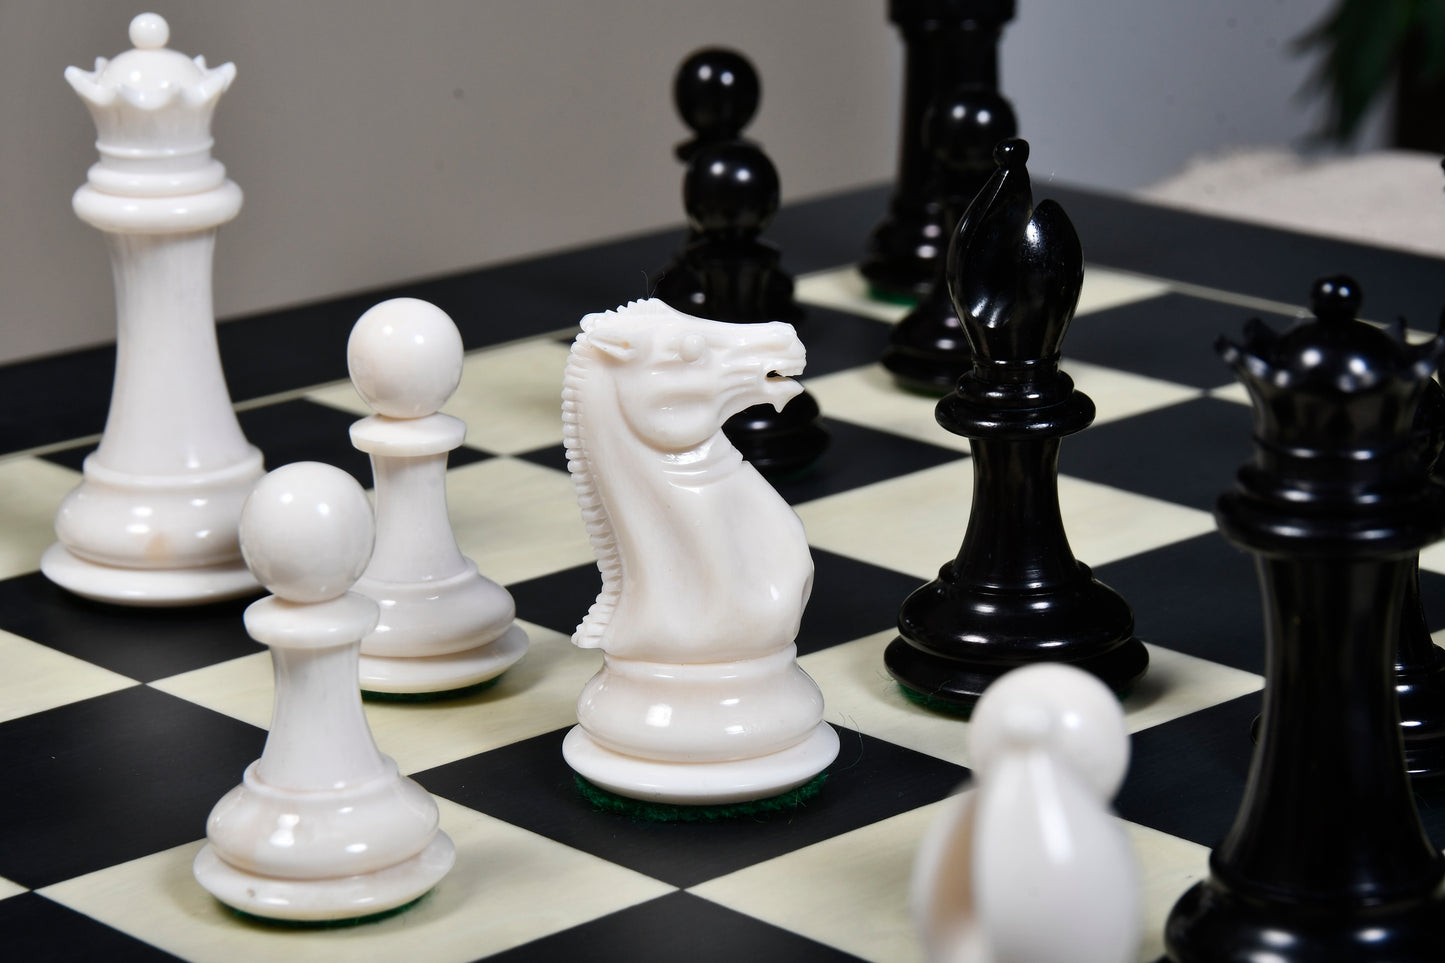 19th Century Staunton Pattern Inspired Camel Bone Chess Set in Black Dyed & Bleached White - 3.6" King